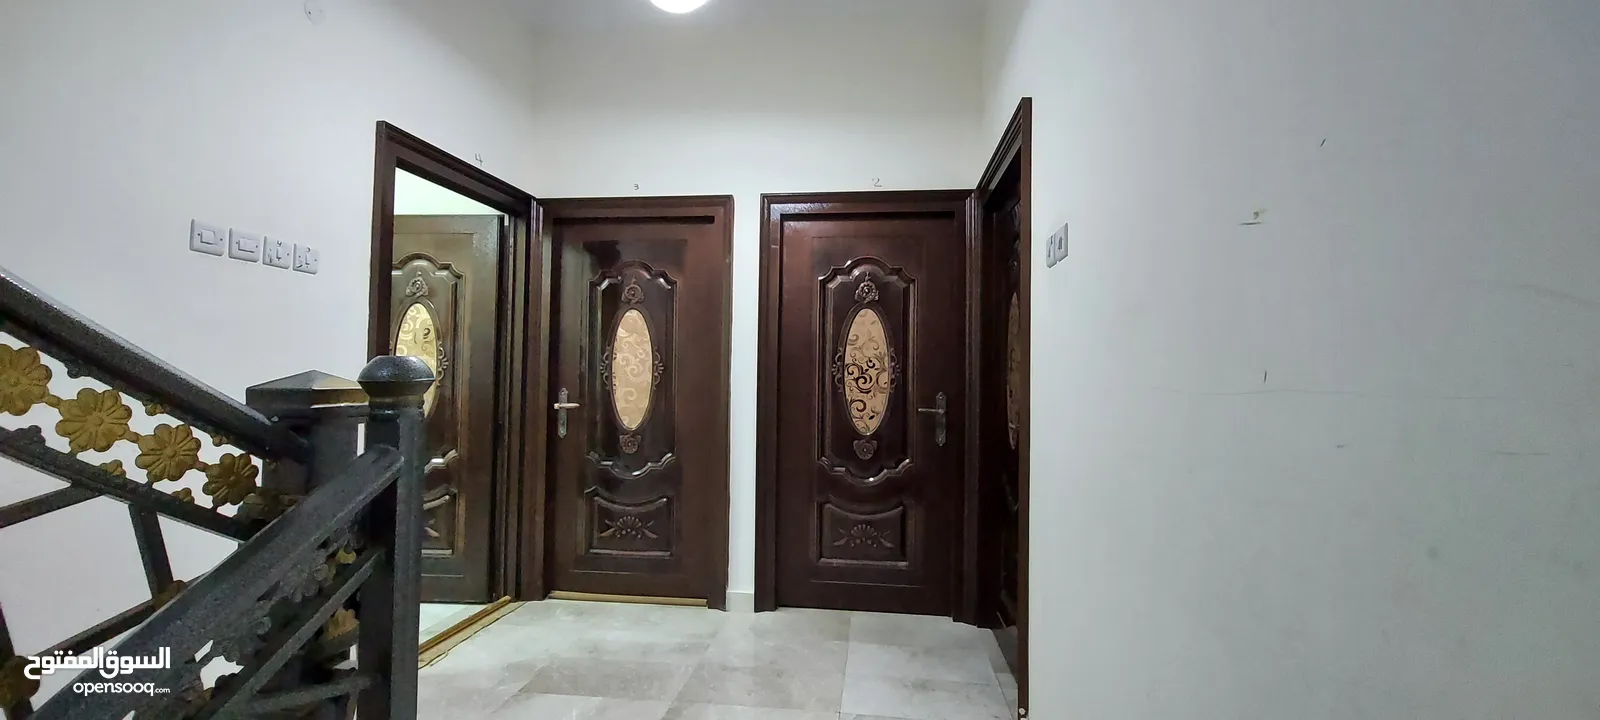 شقق للإيجار صحار غيل الشبول Apartments for rent in Sohar, Gail Al-Shaboul